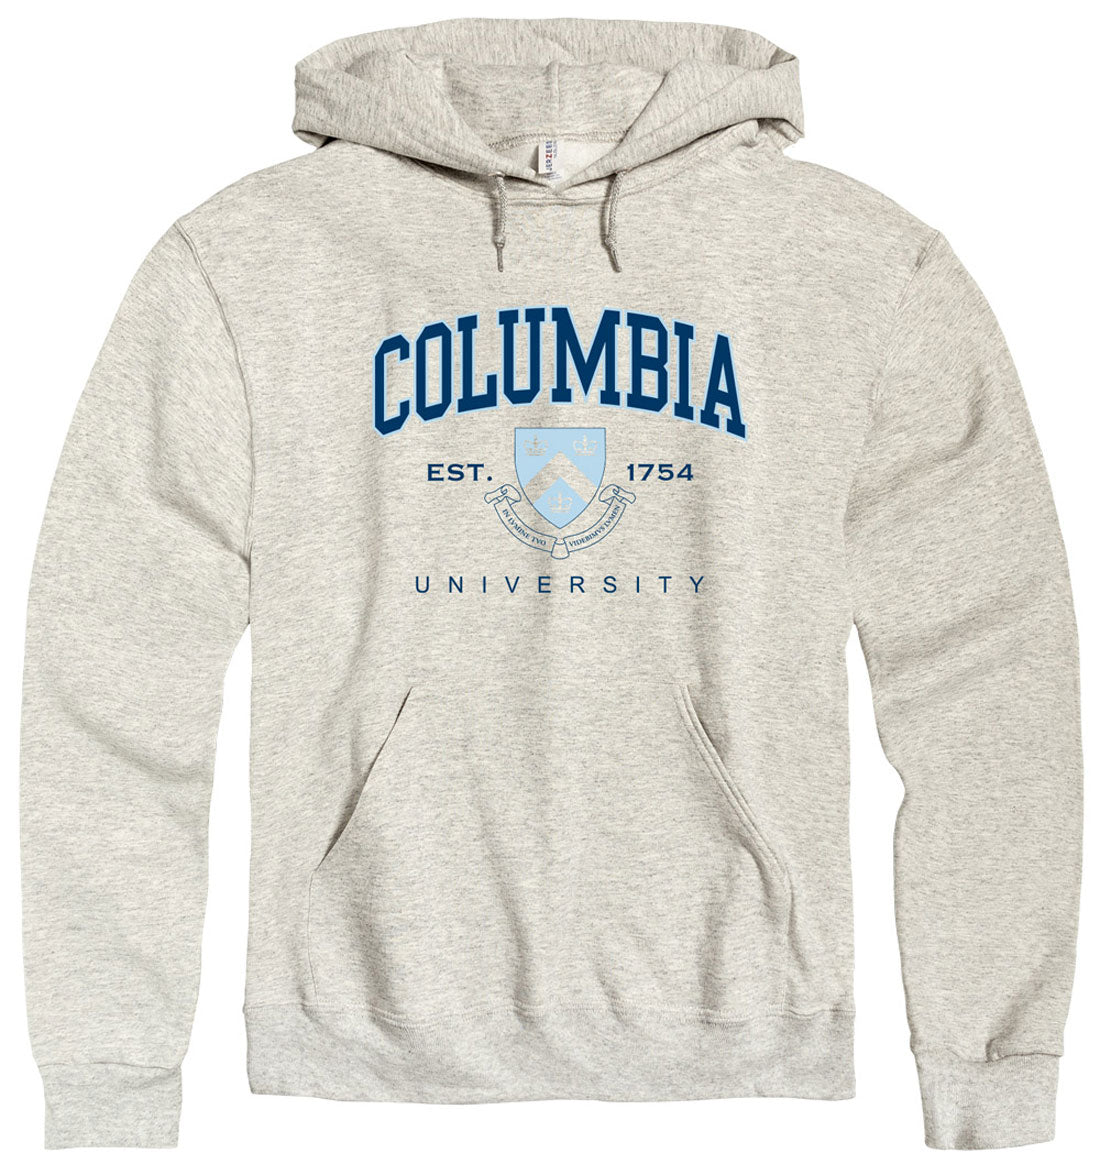 Columbia University arch and seal hoodie sweatshirt-Oatmeal-Shop College Wear